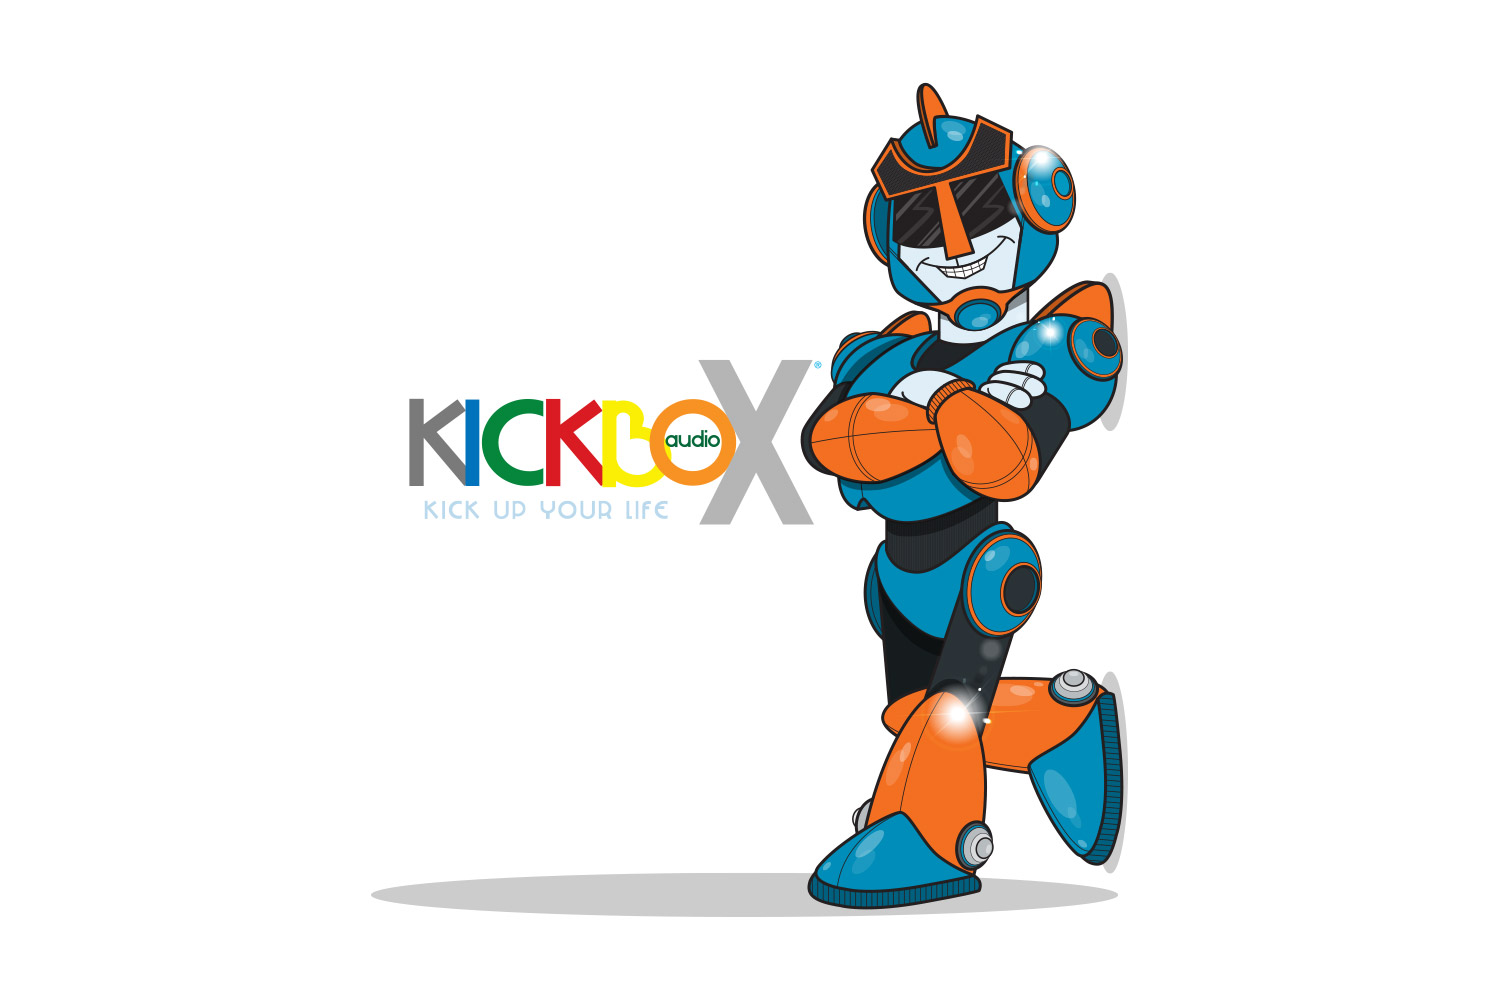 Kickbox Audio Mascot